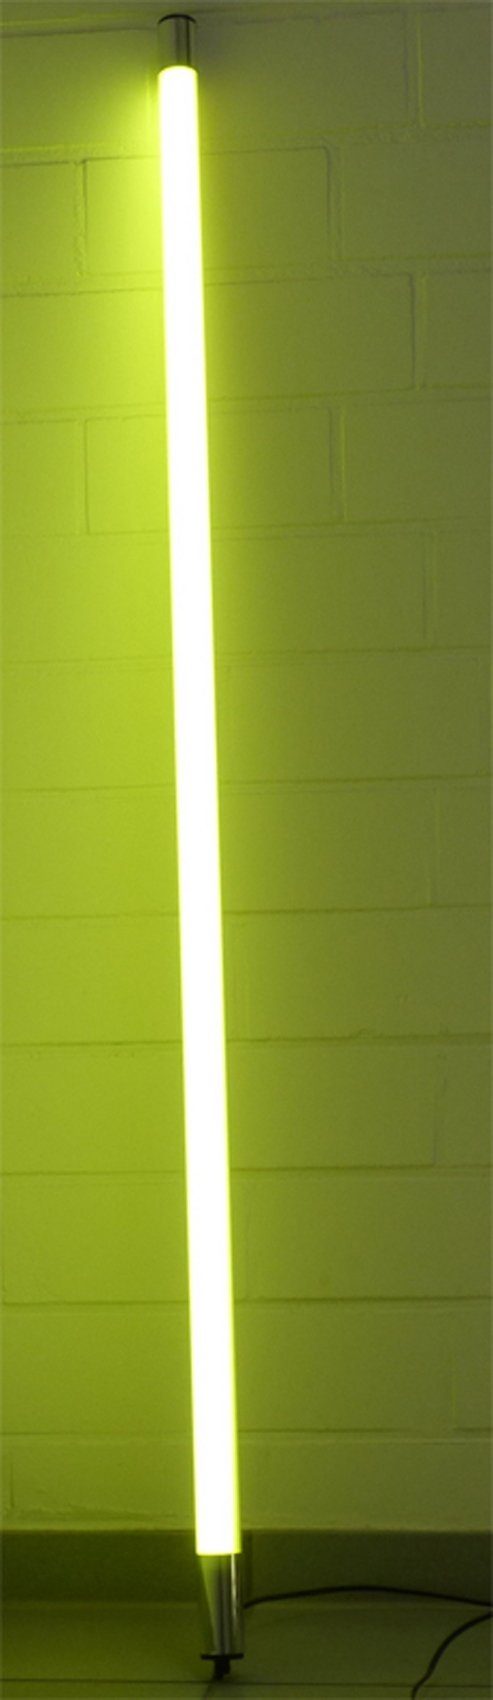 XENON LED Wandleuchte 6466 LED Leuchtstab Satiniert 1,53m Länge 2500 Lumen IP20 Innen Gelb, LED Röhre T8, Xenon